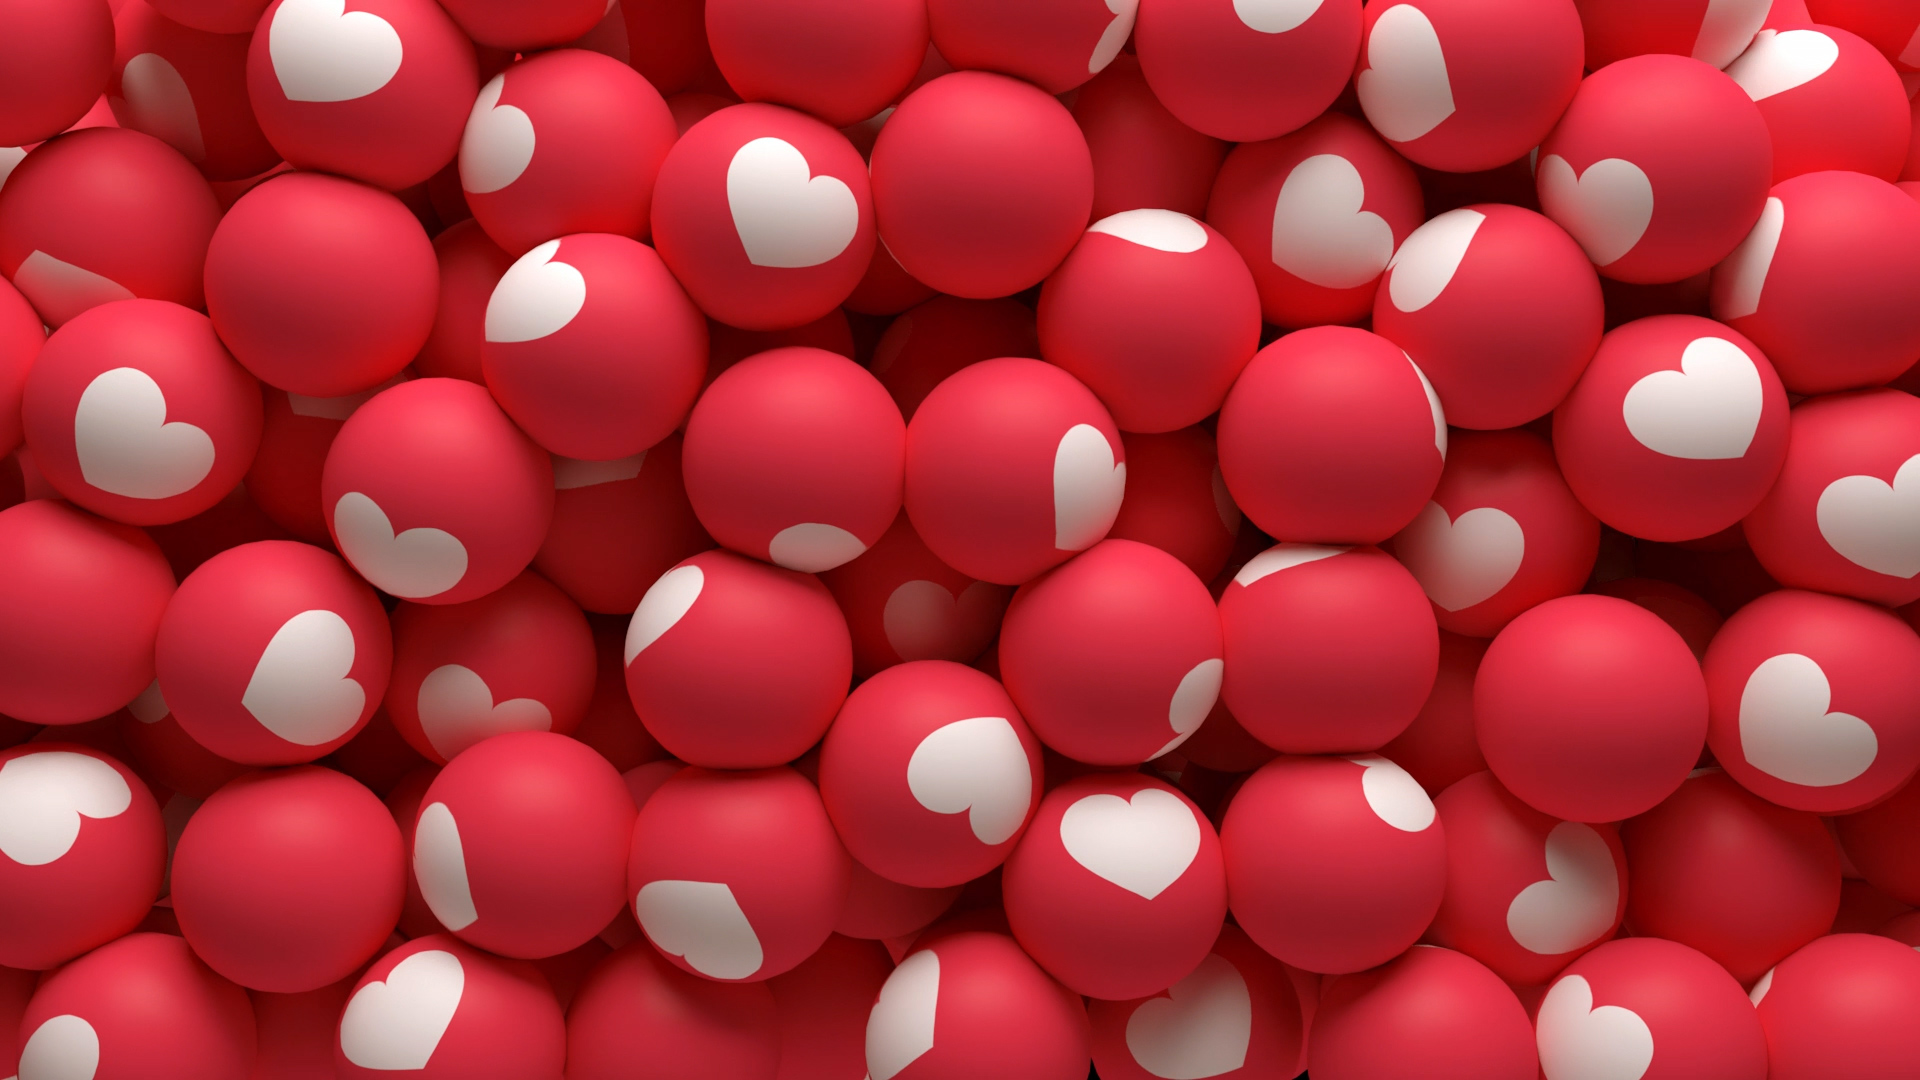 Download Love Hearts Emoji 3D wallpaper, Download free amazing High  Resolution backgrounds images | CorelDraw Design (Download Free CDR,  Vector, Stock Images, Tutorials, Tips & Tricks)